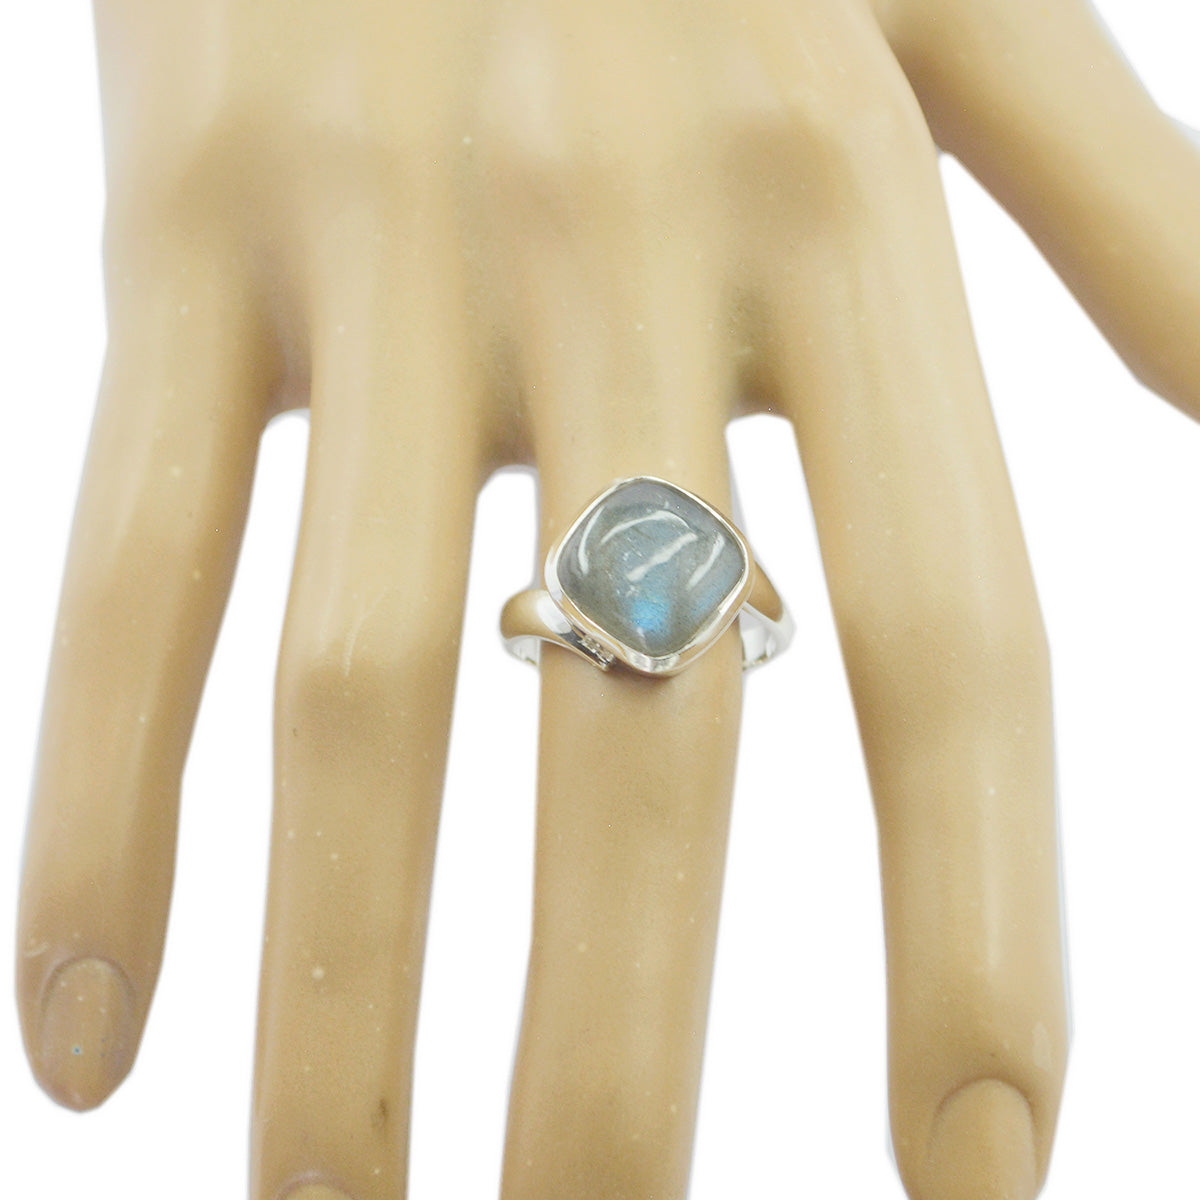 Riyo Cunning Stone Labradorite 925 Silver Ring Pre Owned Jewelry